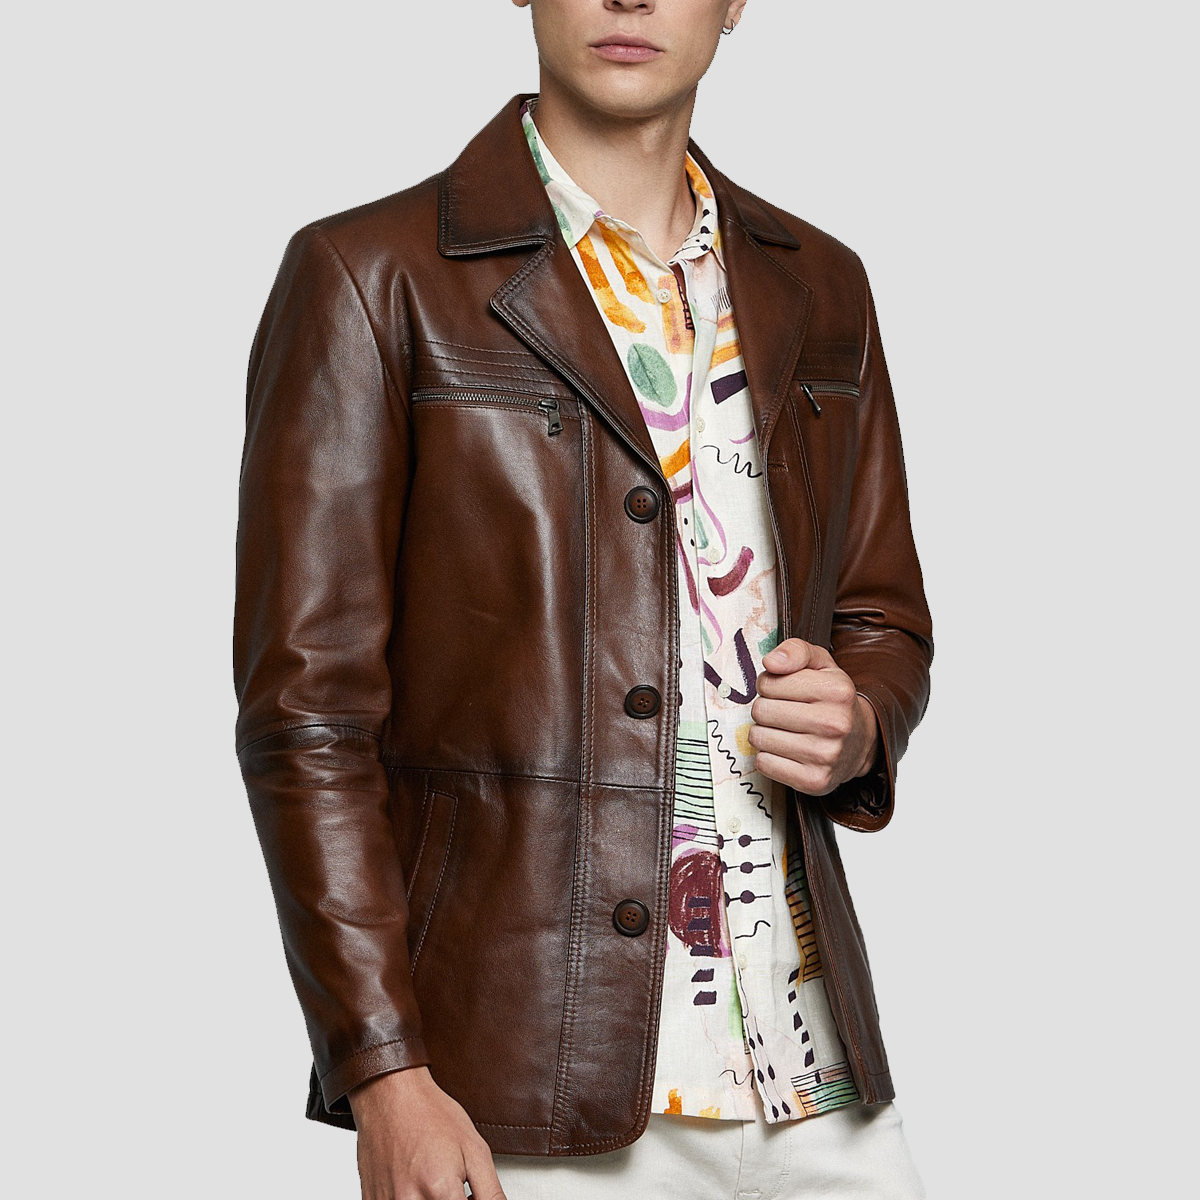 Online Vintage Store, 80's Men Leather Blazer Jacket